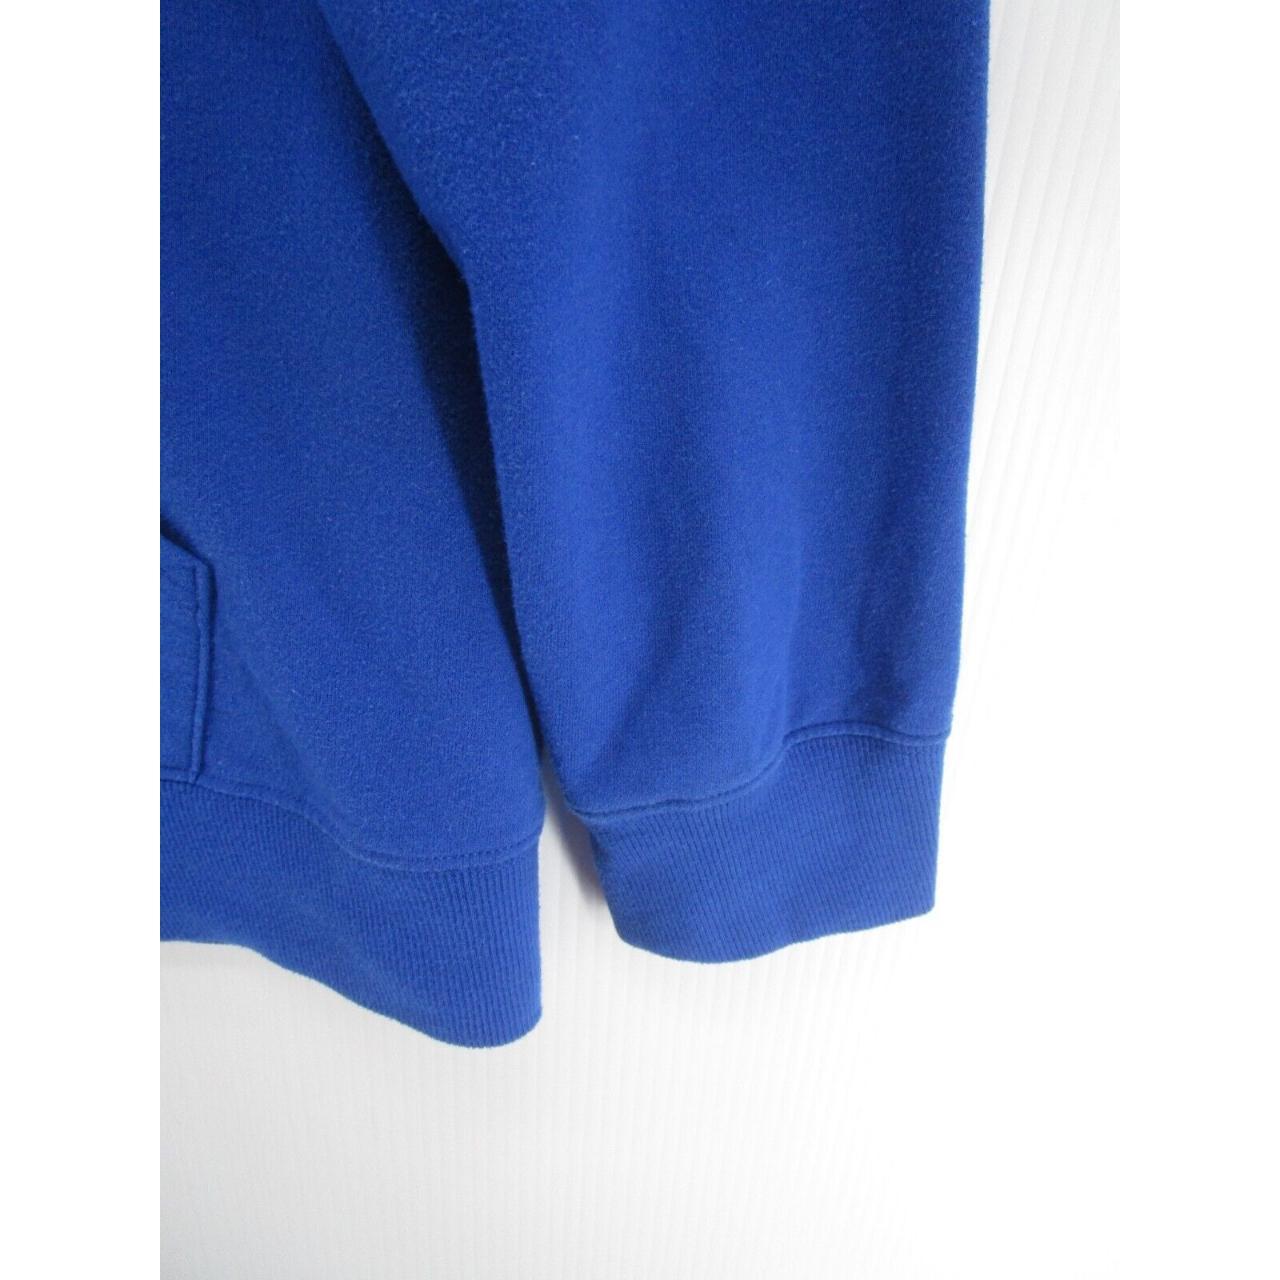 New York Rangers Sweatshirt Women Large Blue CCM - Depop